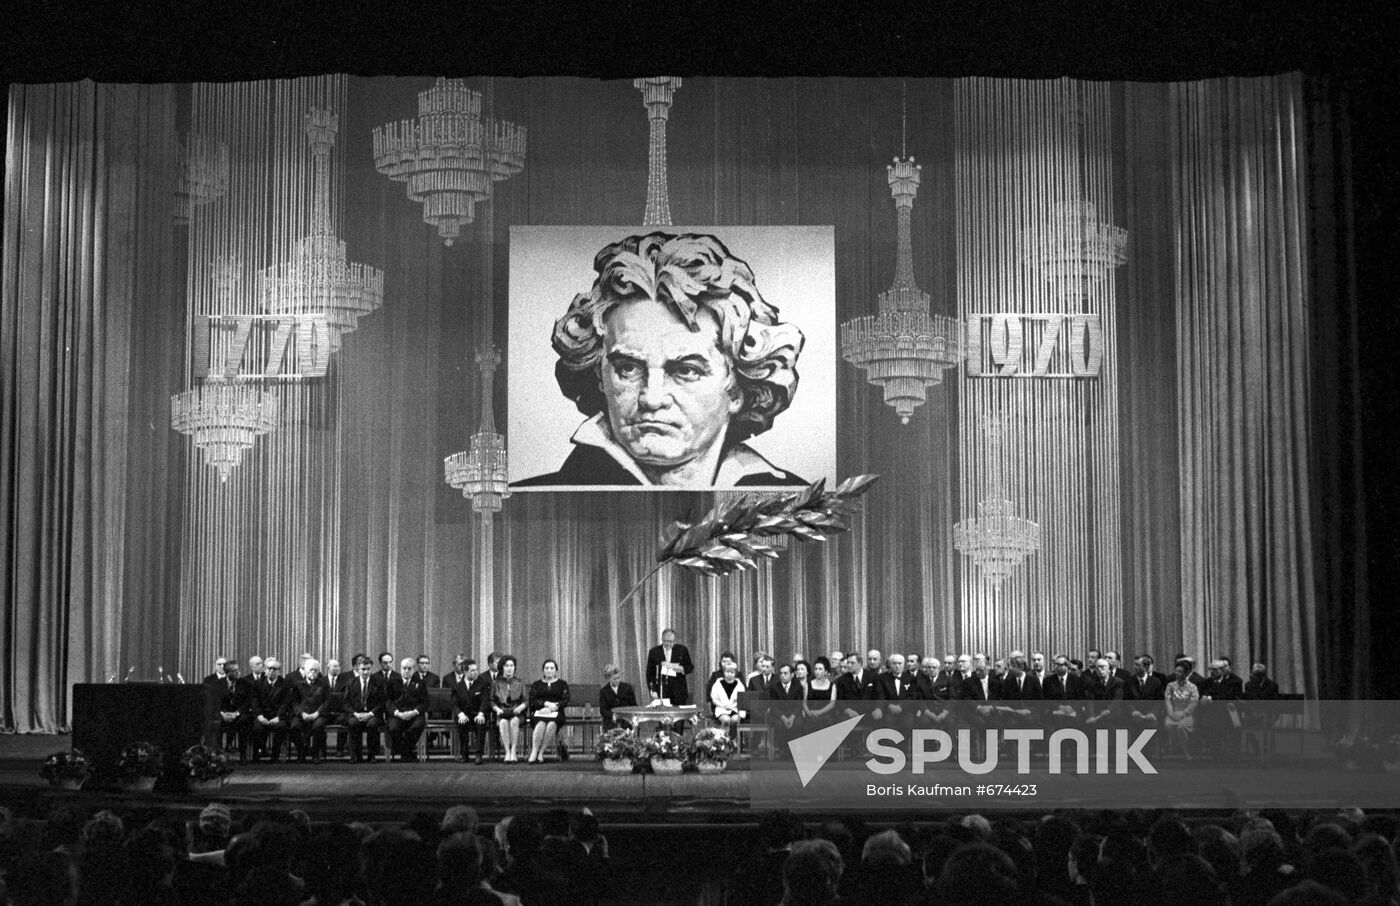 Gala to mark bicentenary of Ludwig van Beethoven